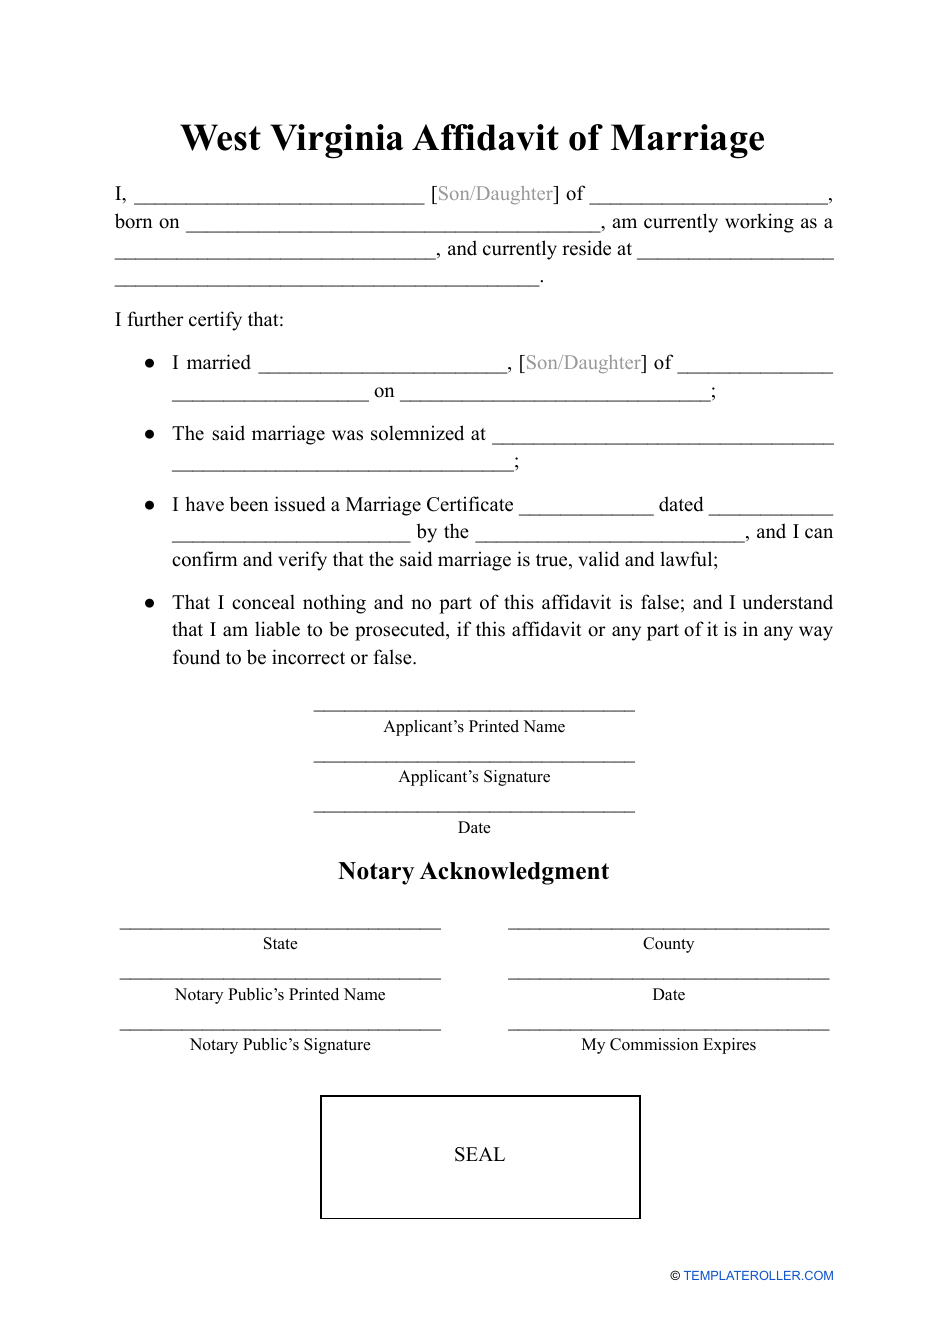 Affidavit of Marriage - West Virginia, Page 1